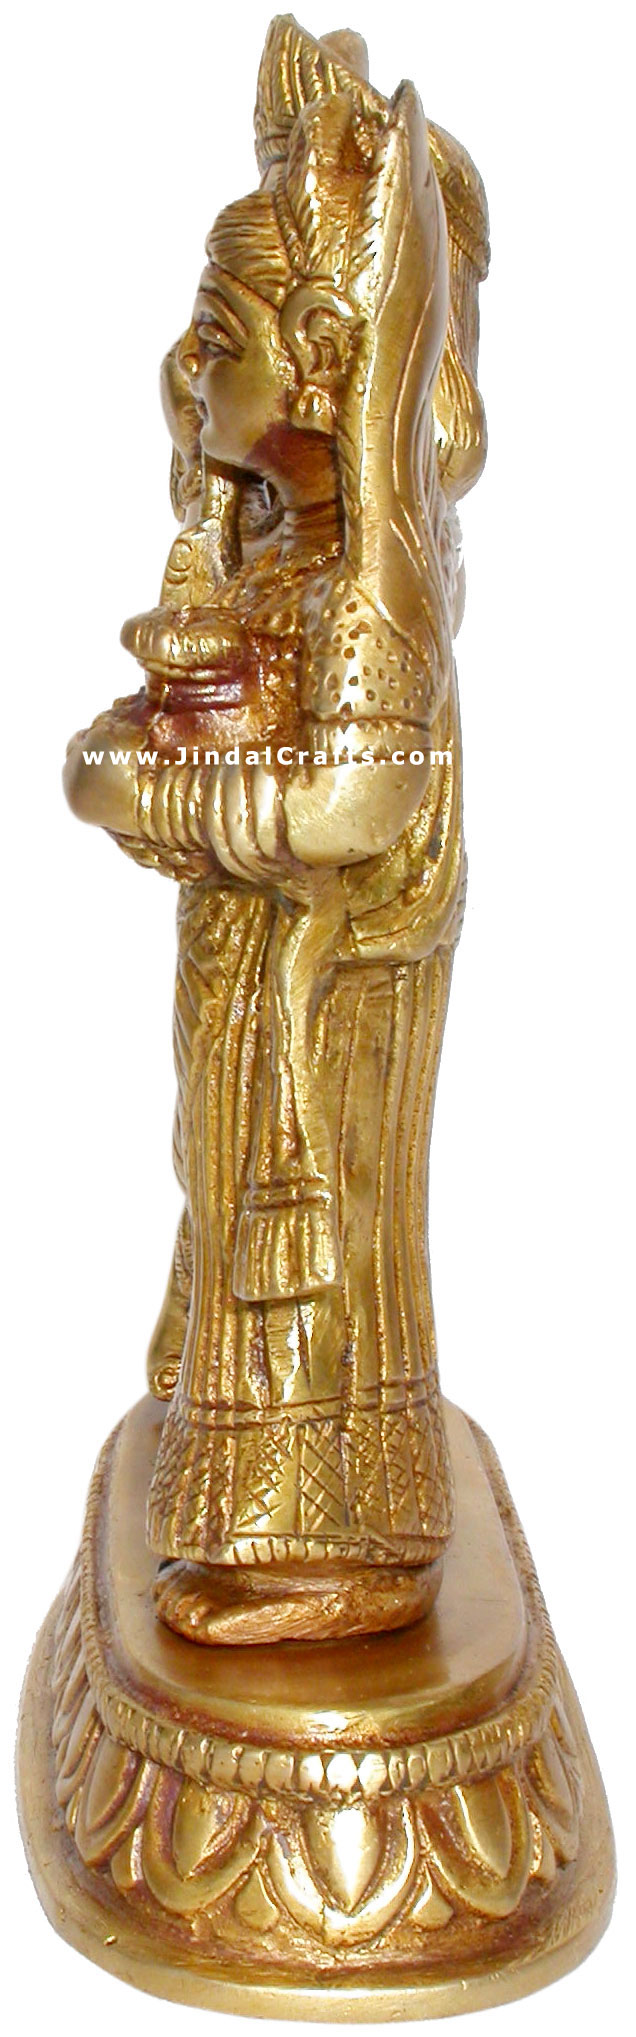 Radha Krishan Hindu Religious Statue Brass Carving Art